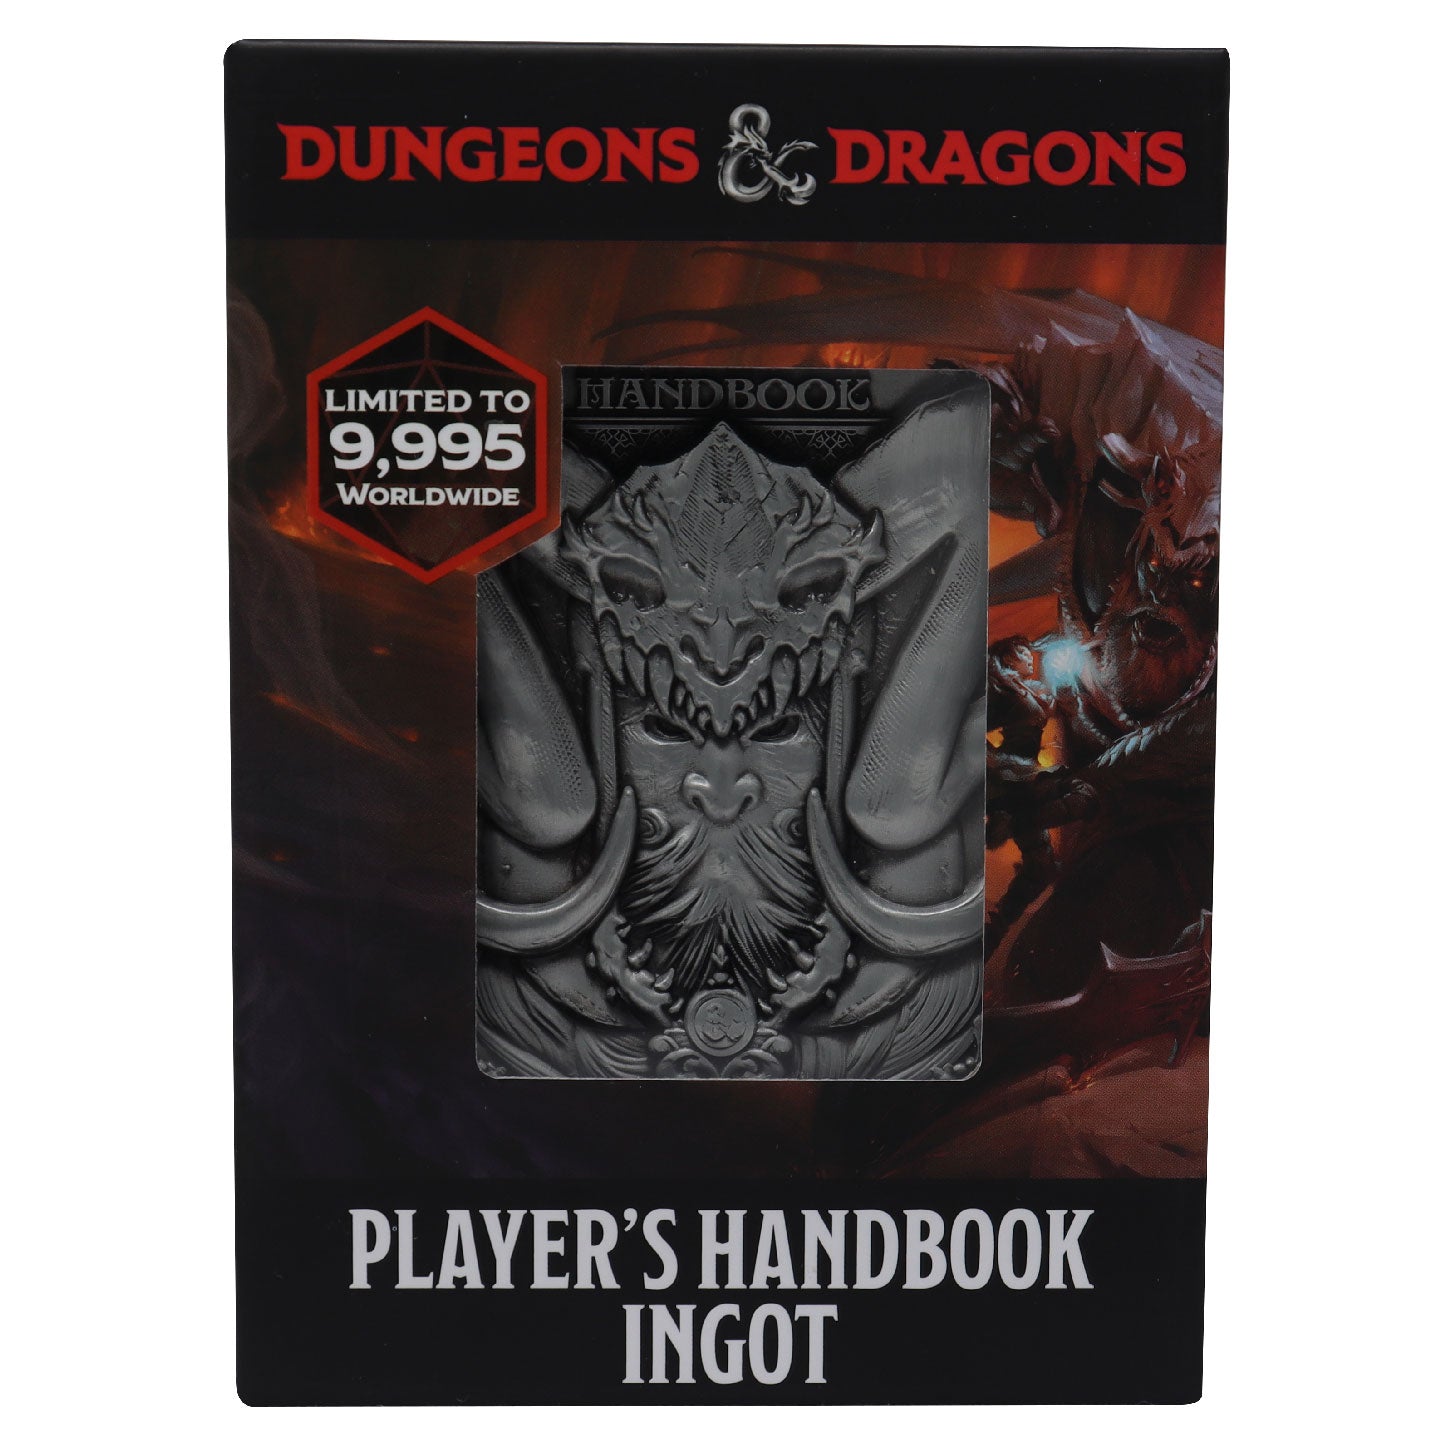 Dungeons & Dragons Limited Edition Players Handbook Ingot